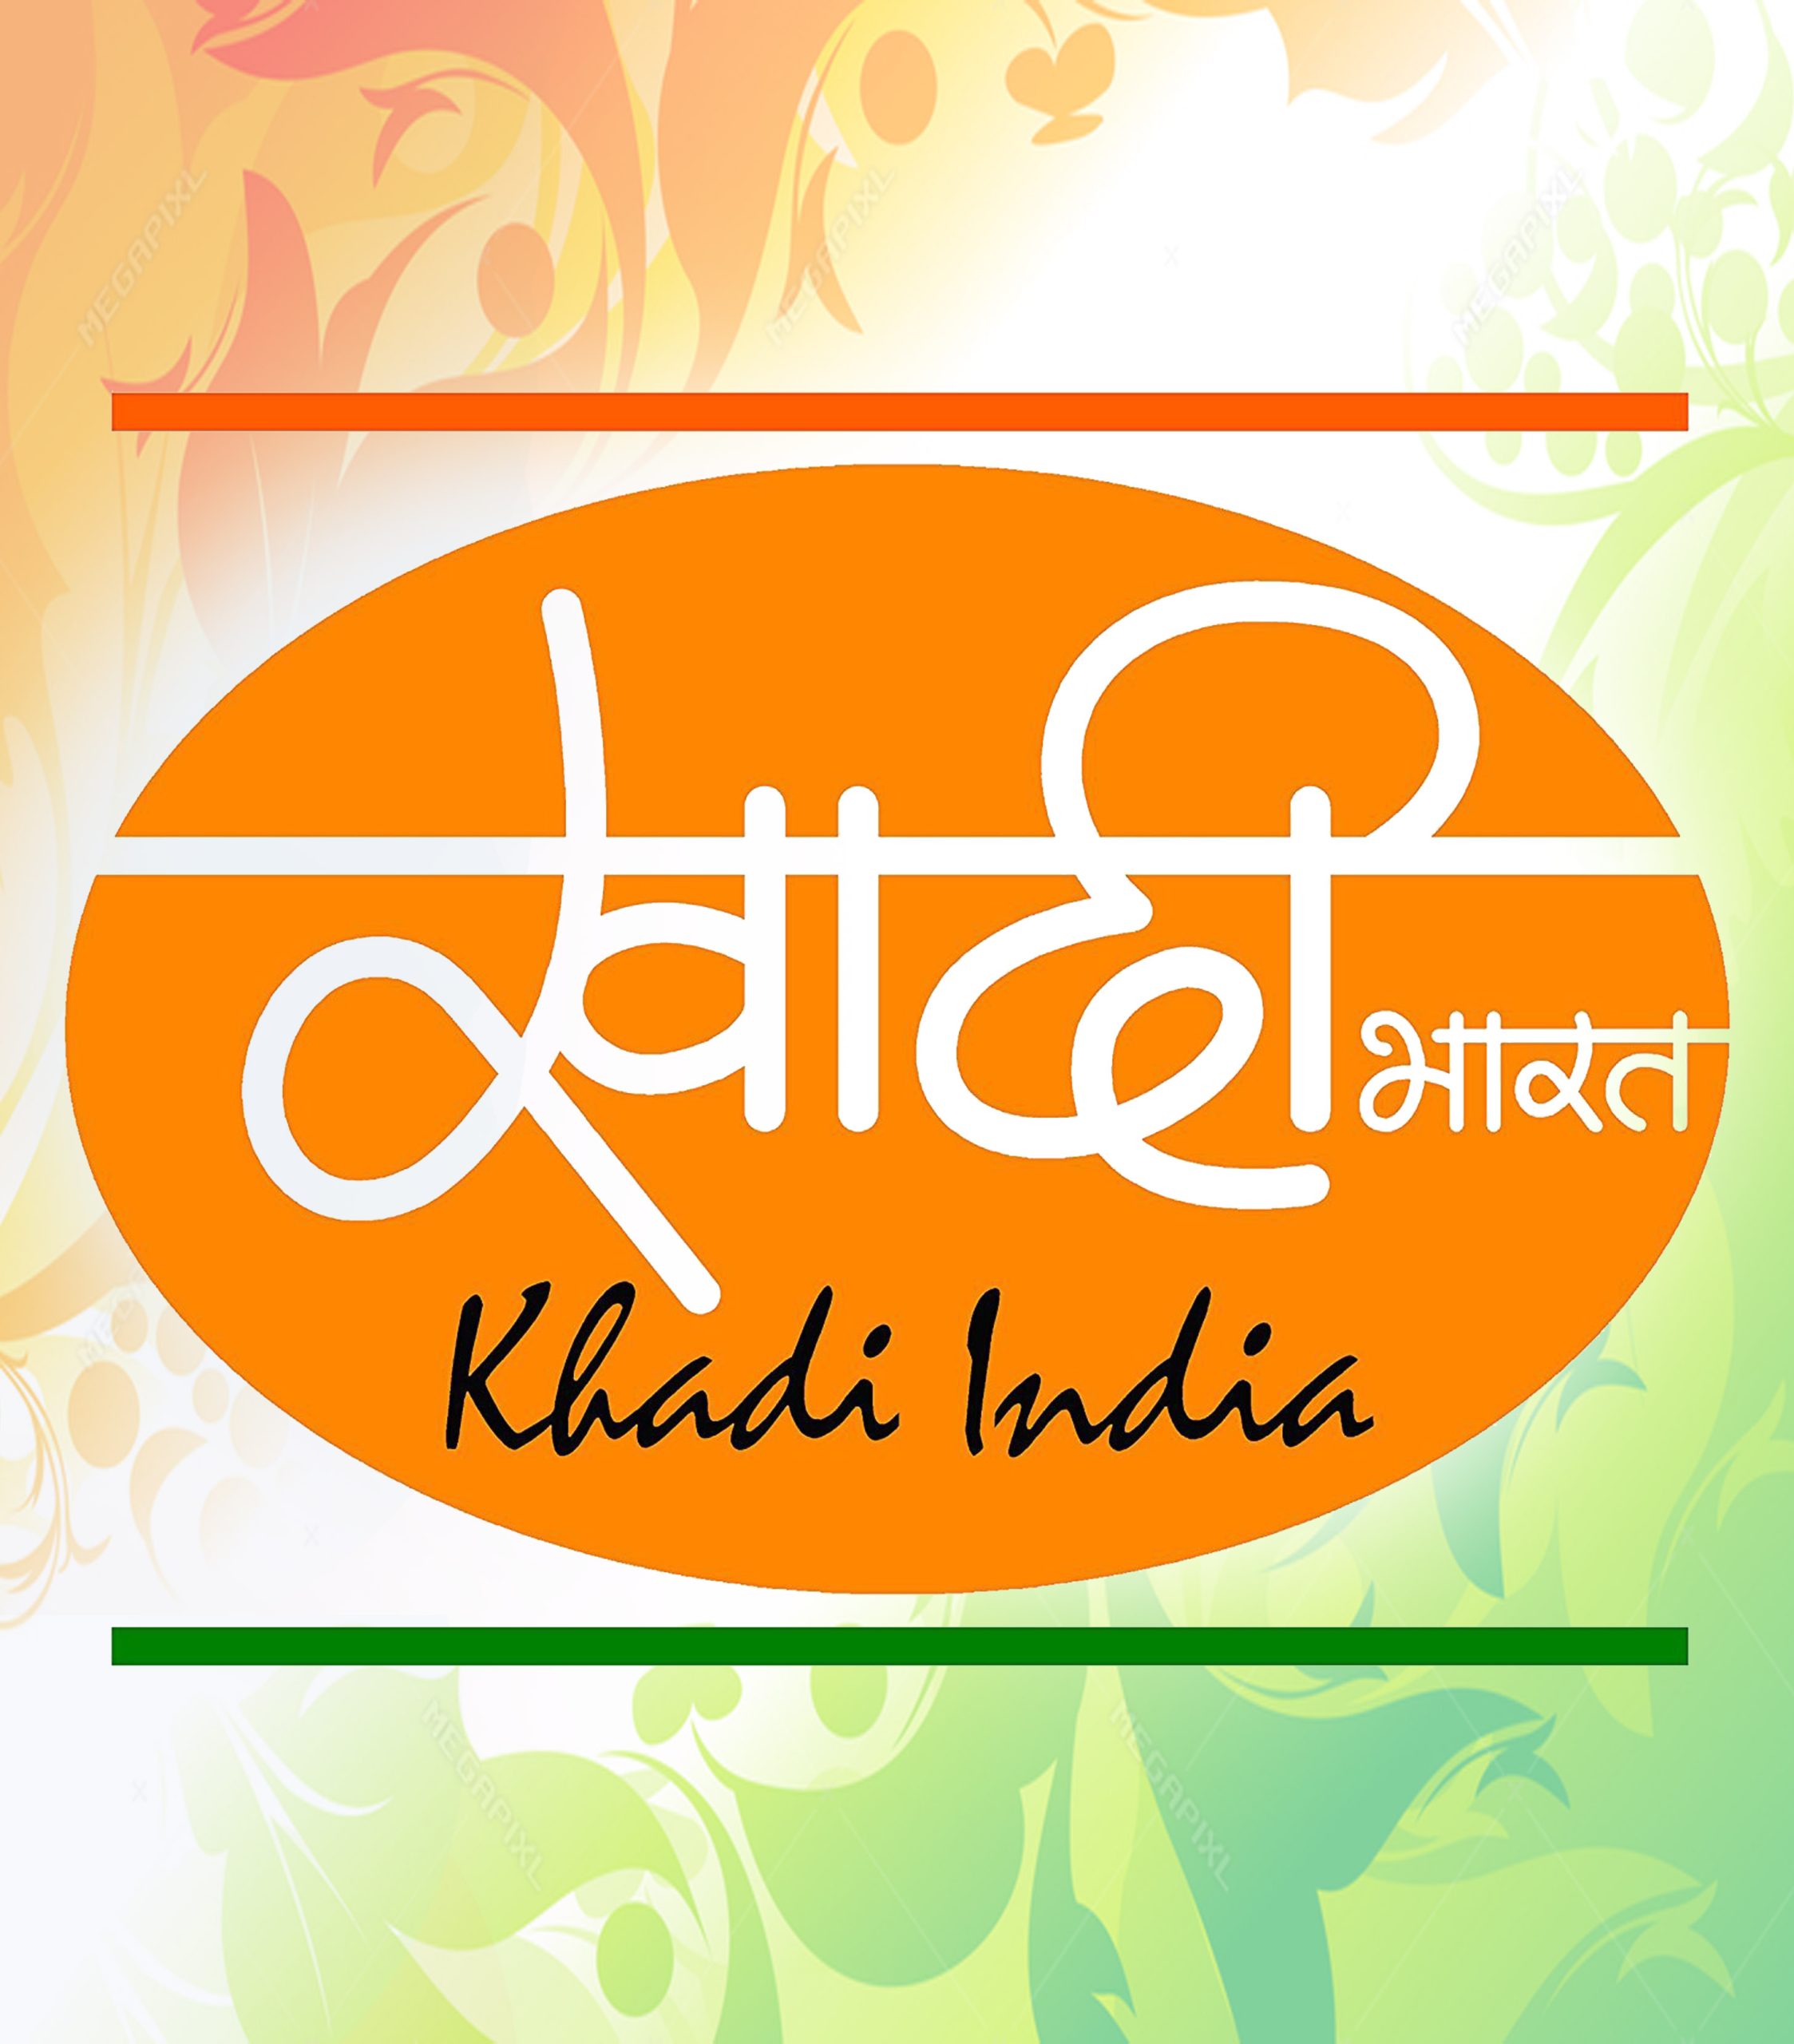 Khadi Logo scaled - - বাঙালী উদ্যোগপতিদের বেঁচে থাকার লড়াই